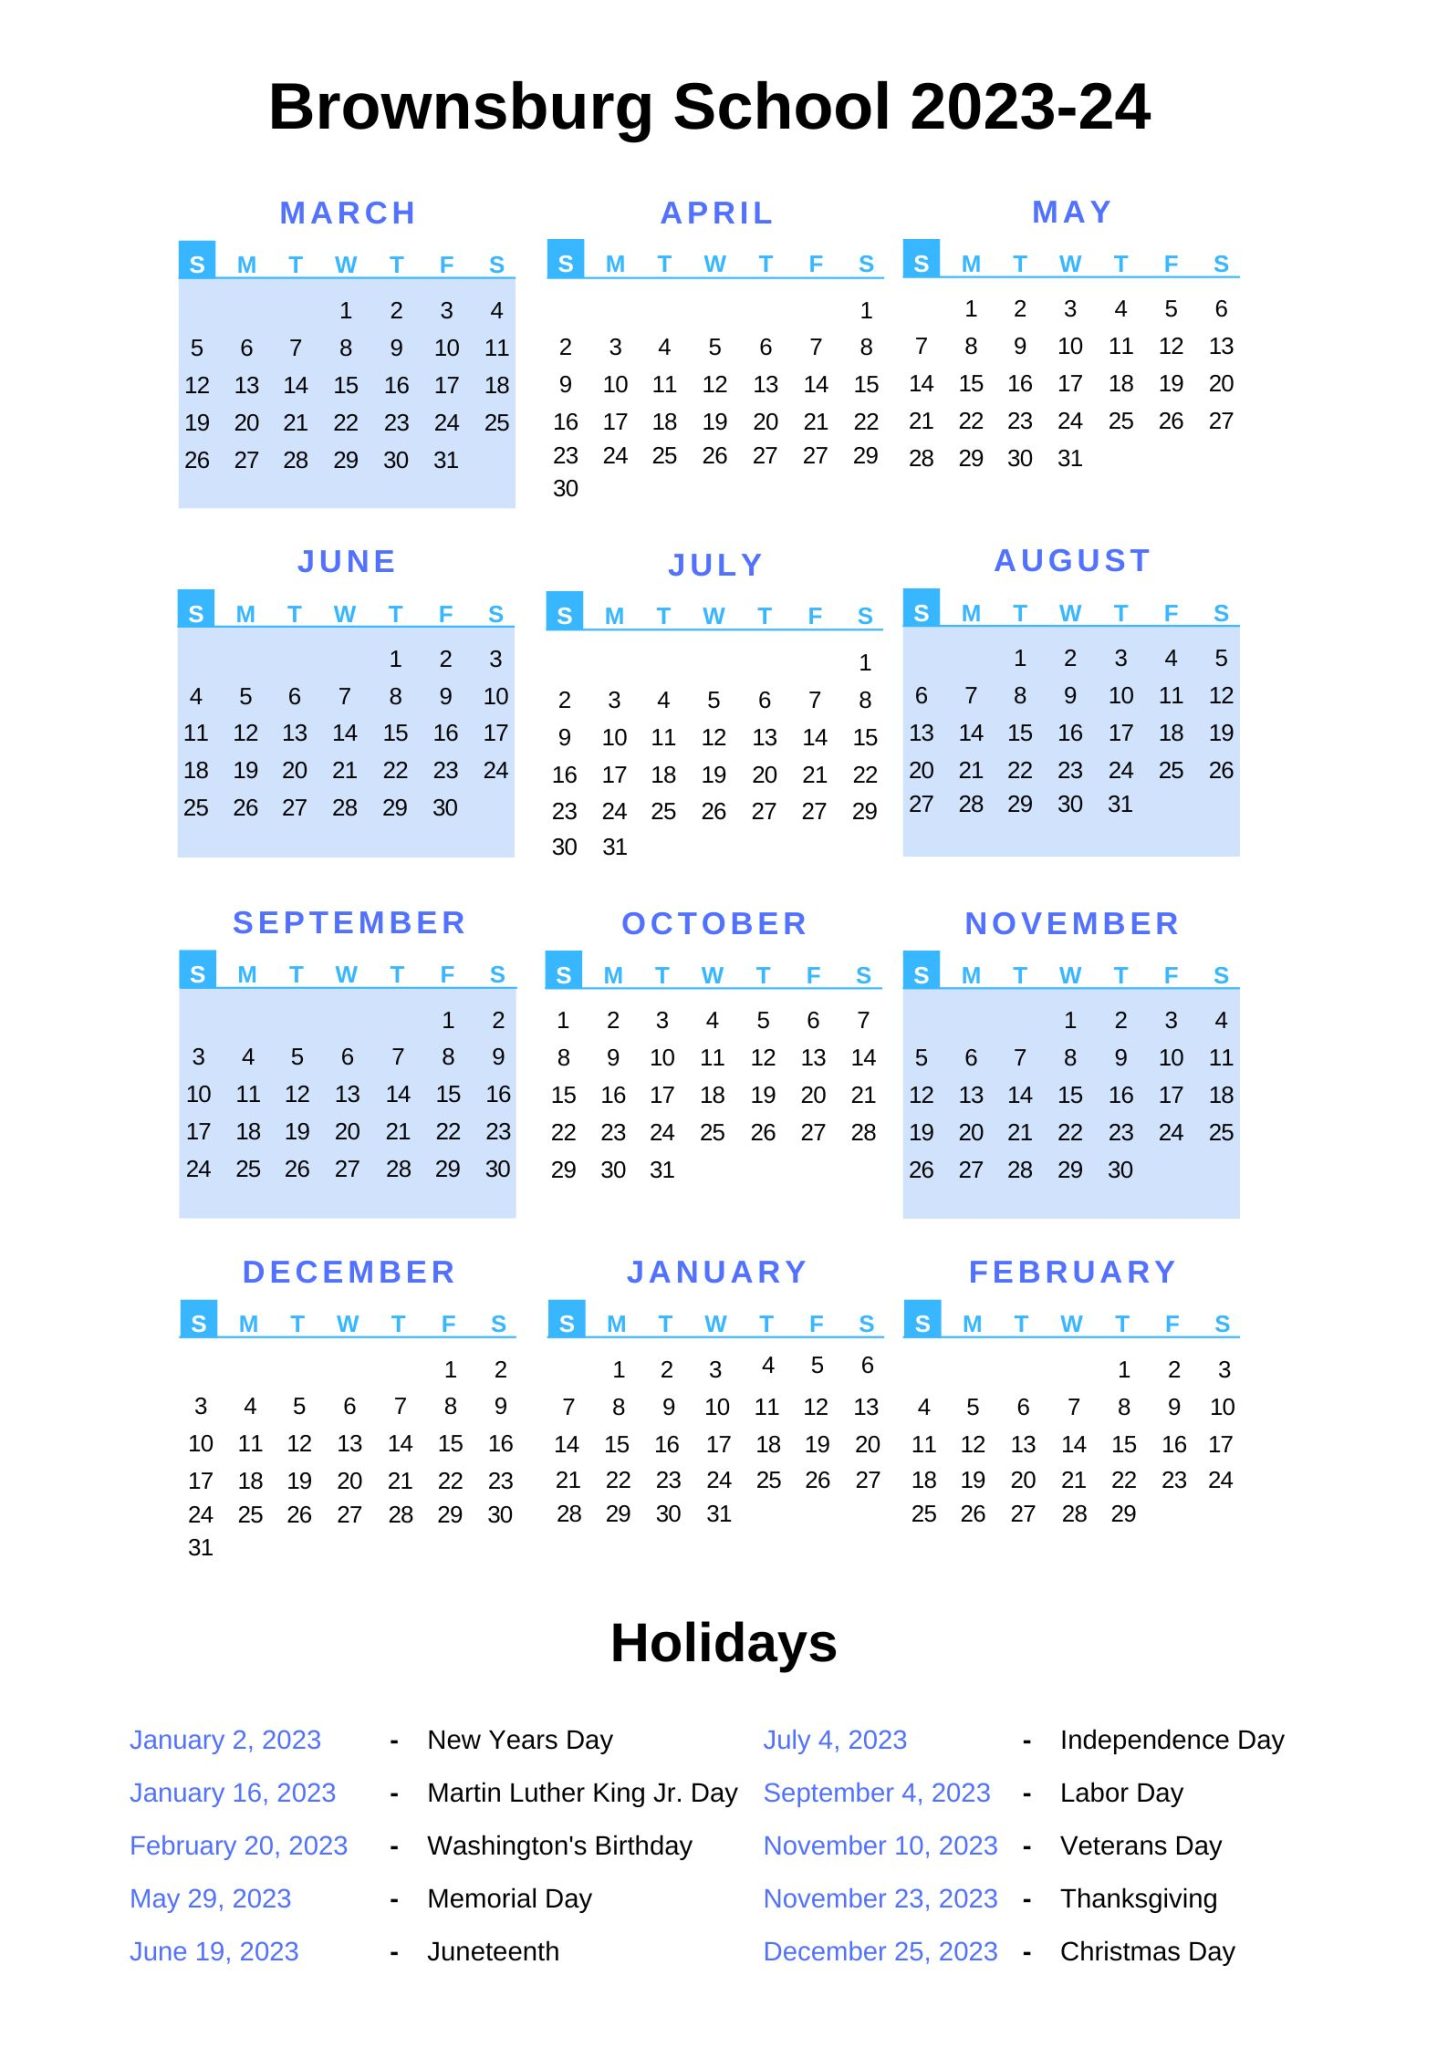 Brownsburg Schools Calendar 202324 with holidays